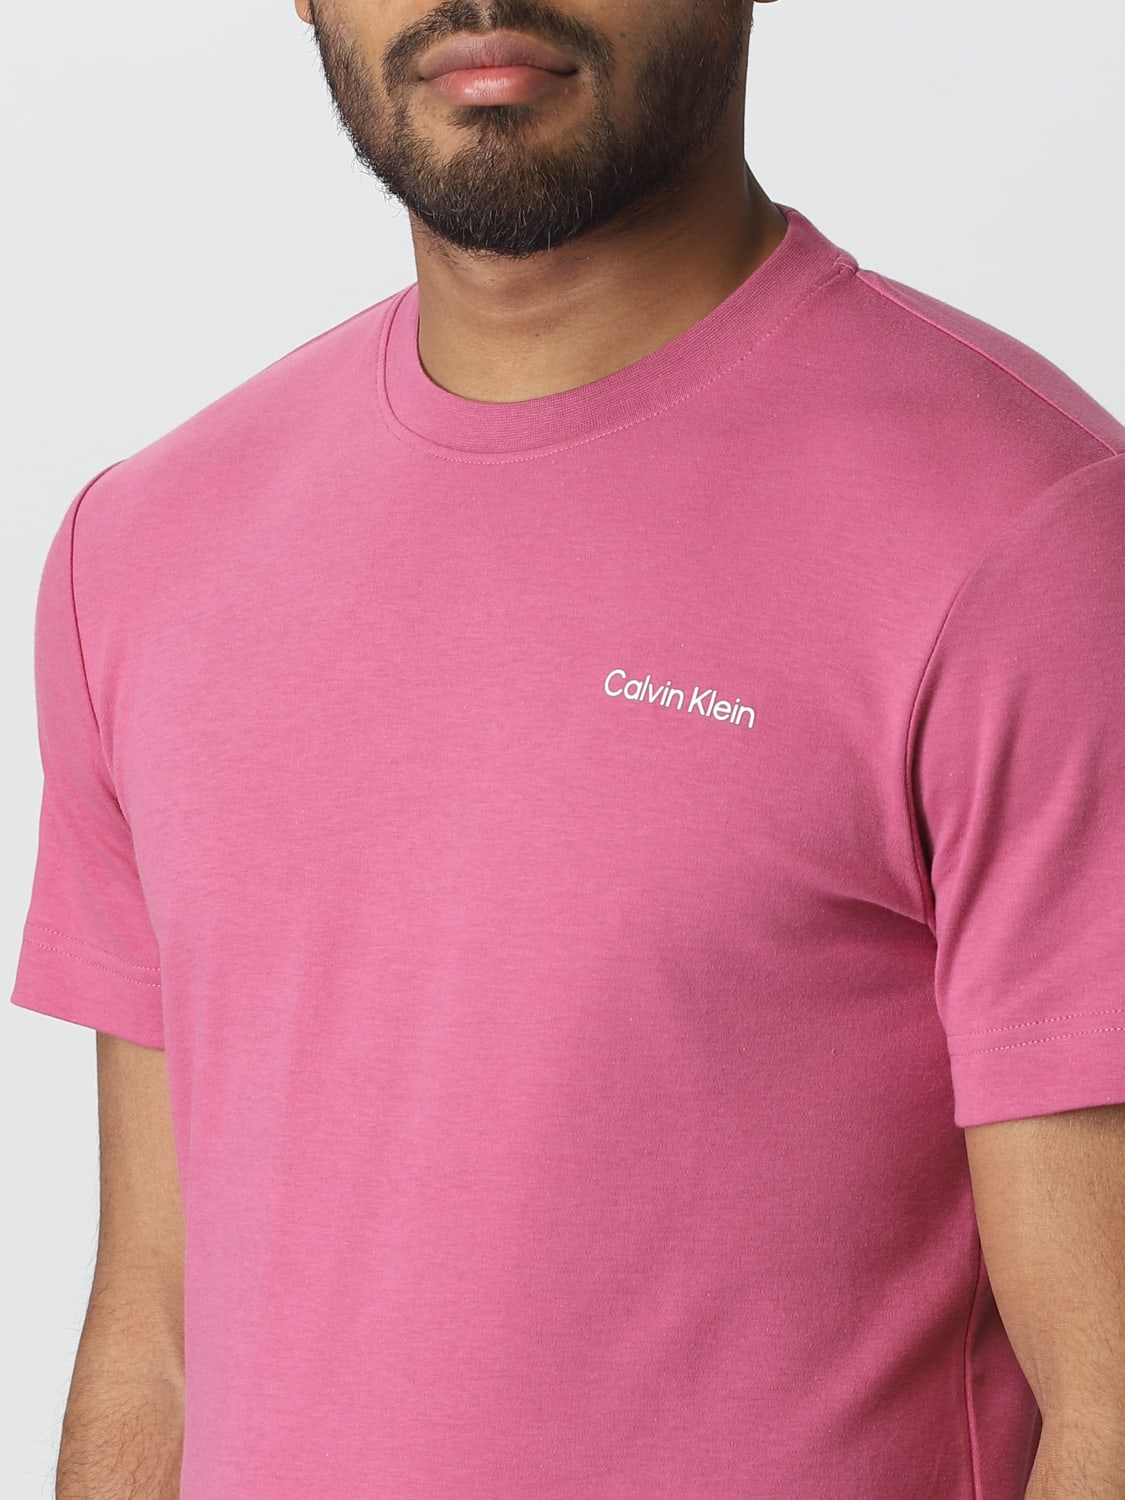 Forudsætning maternal Vuggeviser CALVIN KLEIN: t-shirt for man - Fuchsia | Calvin Klein t-shirt K10K109894  online on GIGLIO.COM